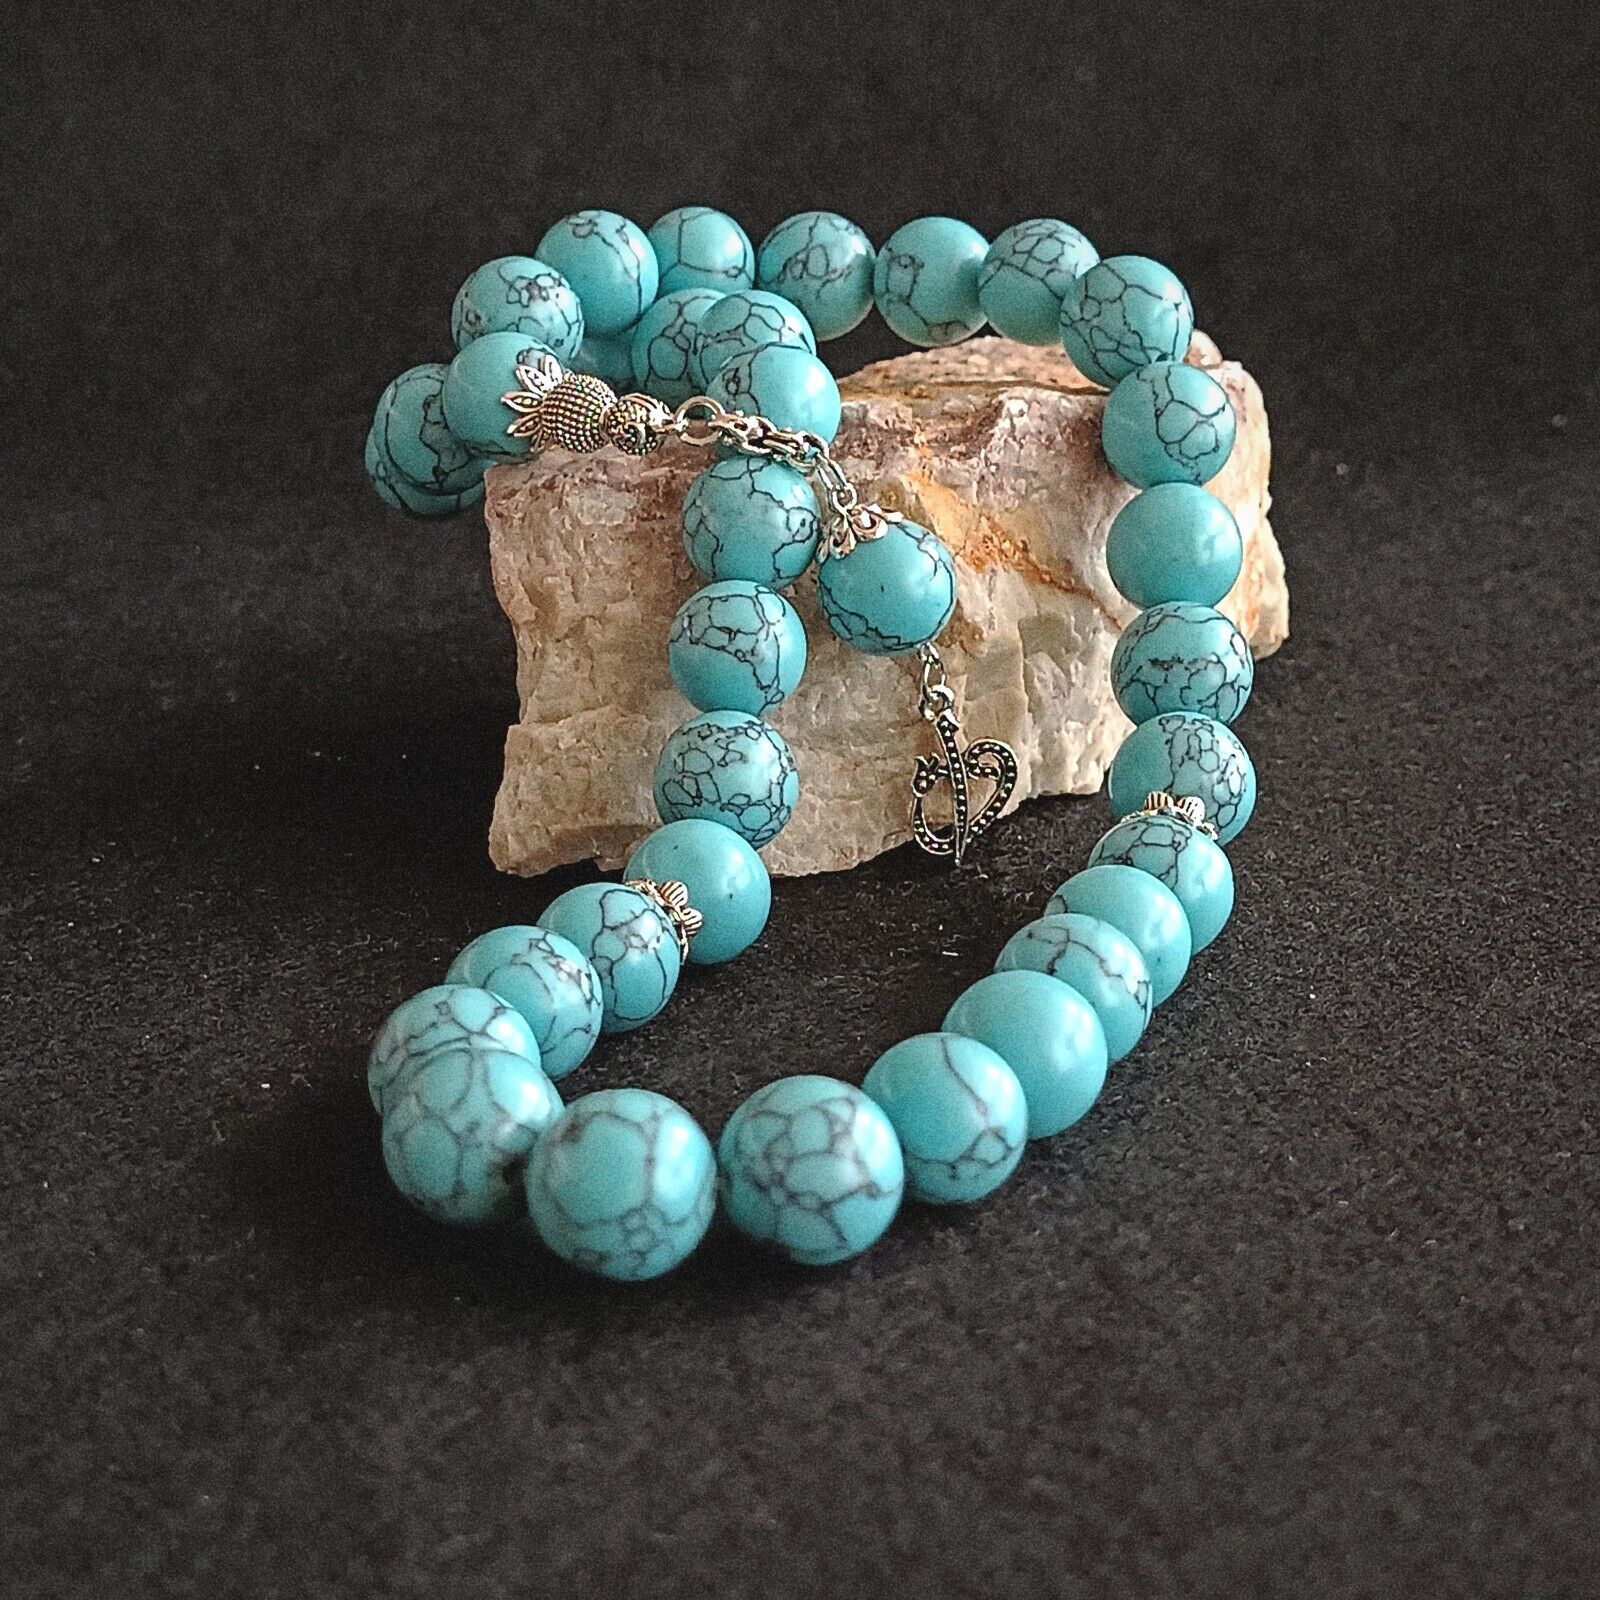 14mm Turquoise Stone Tasbih, Gemstone Rosary, Tasbeeh 33, Large Prayer Beads